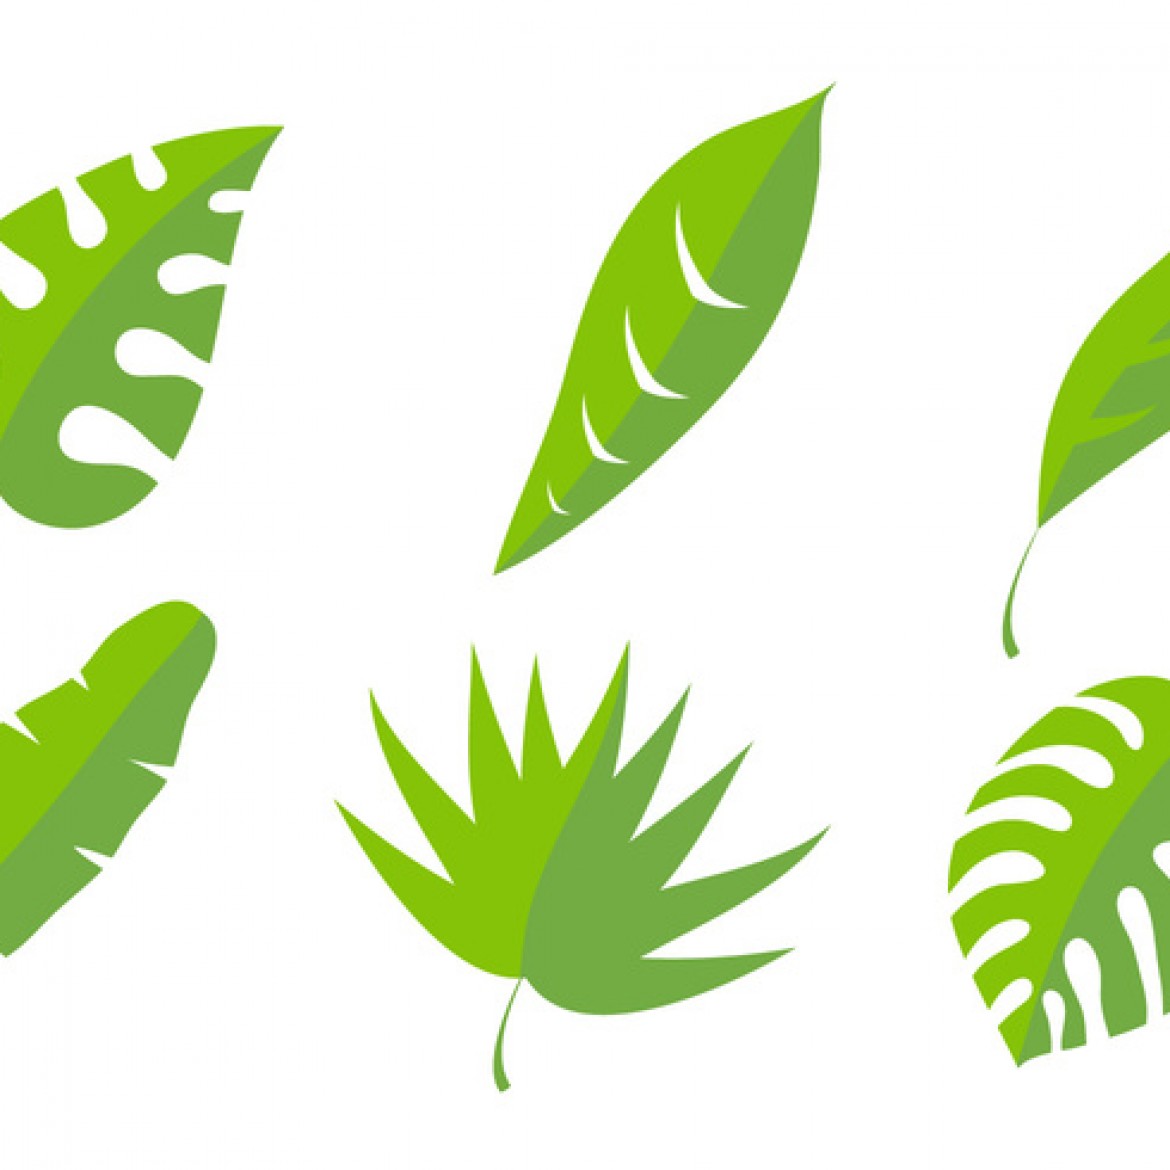 leaf clip art free vector download - photo #39